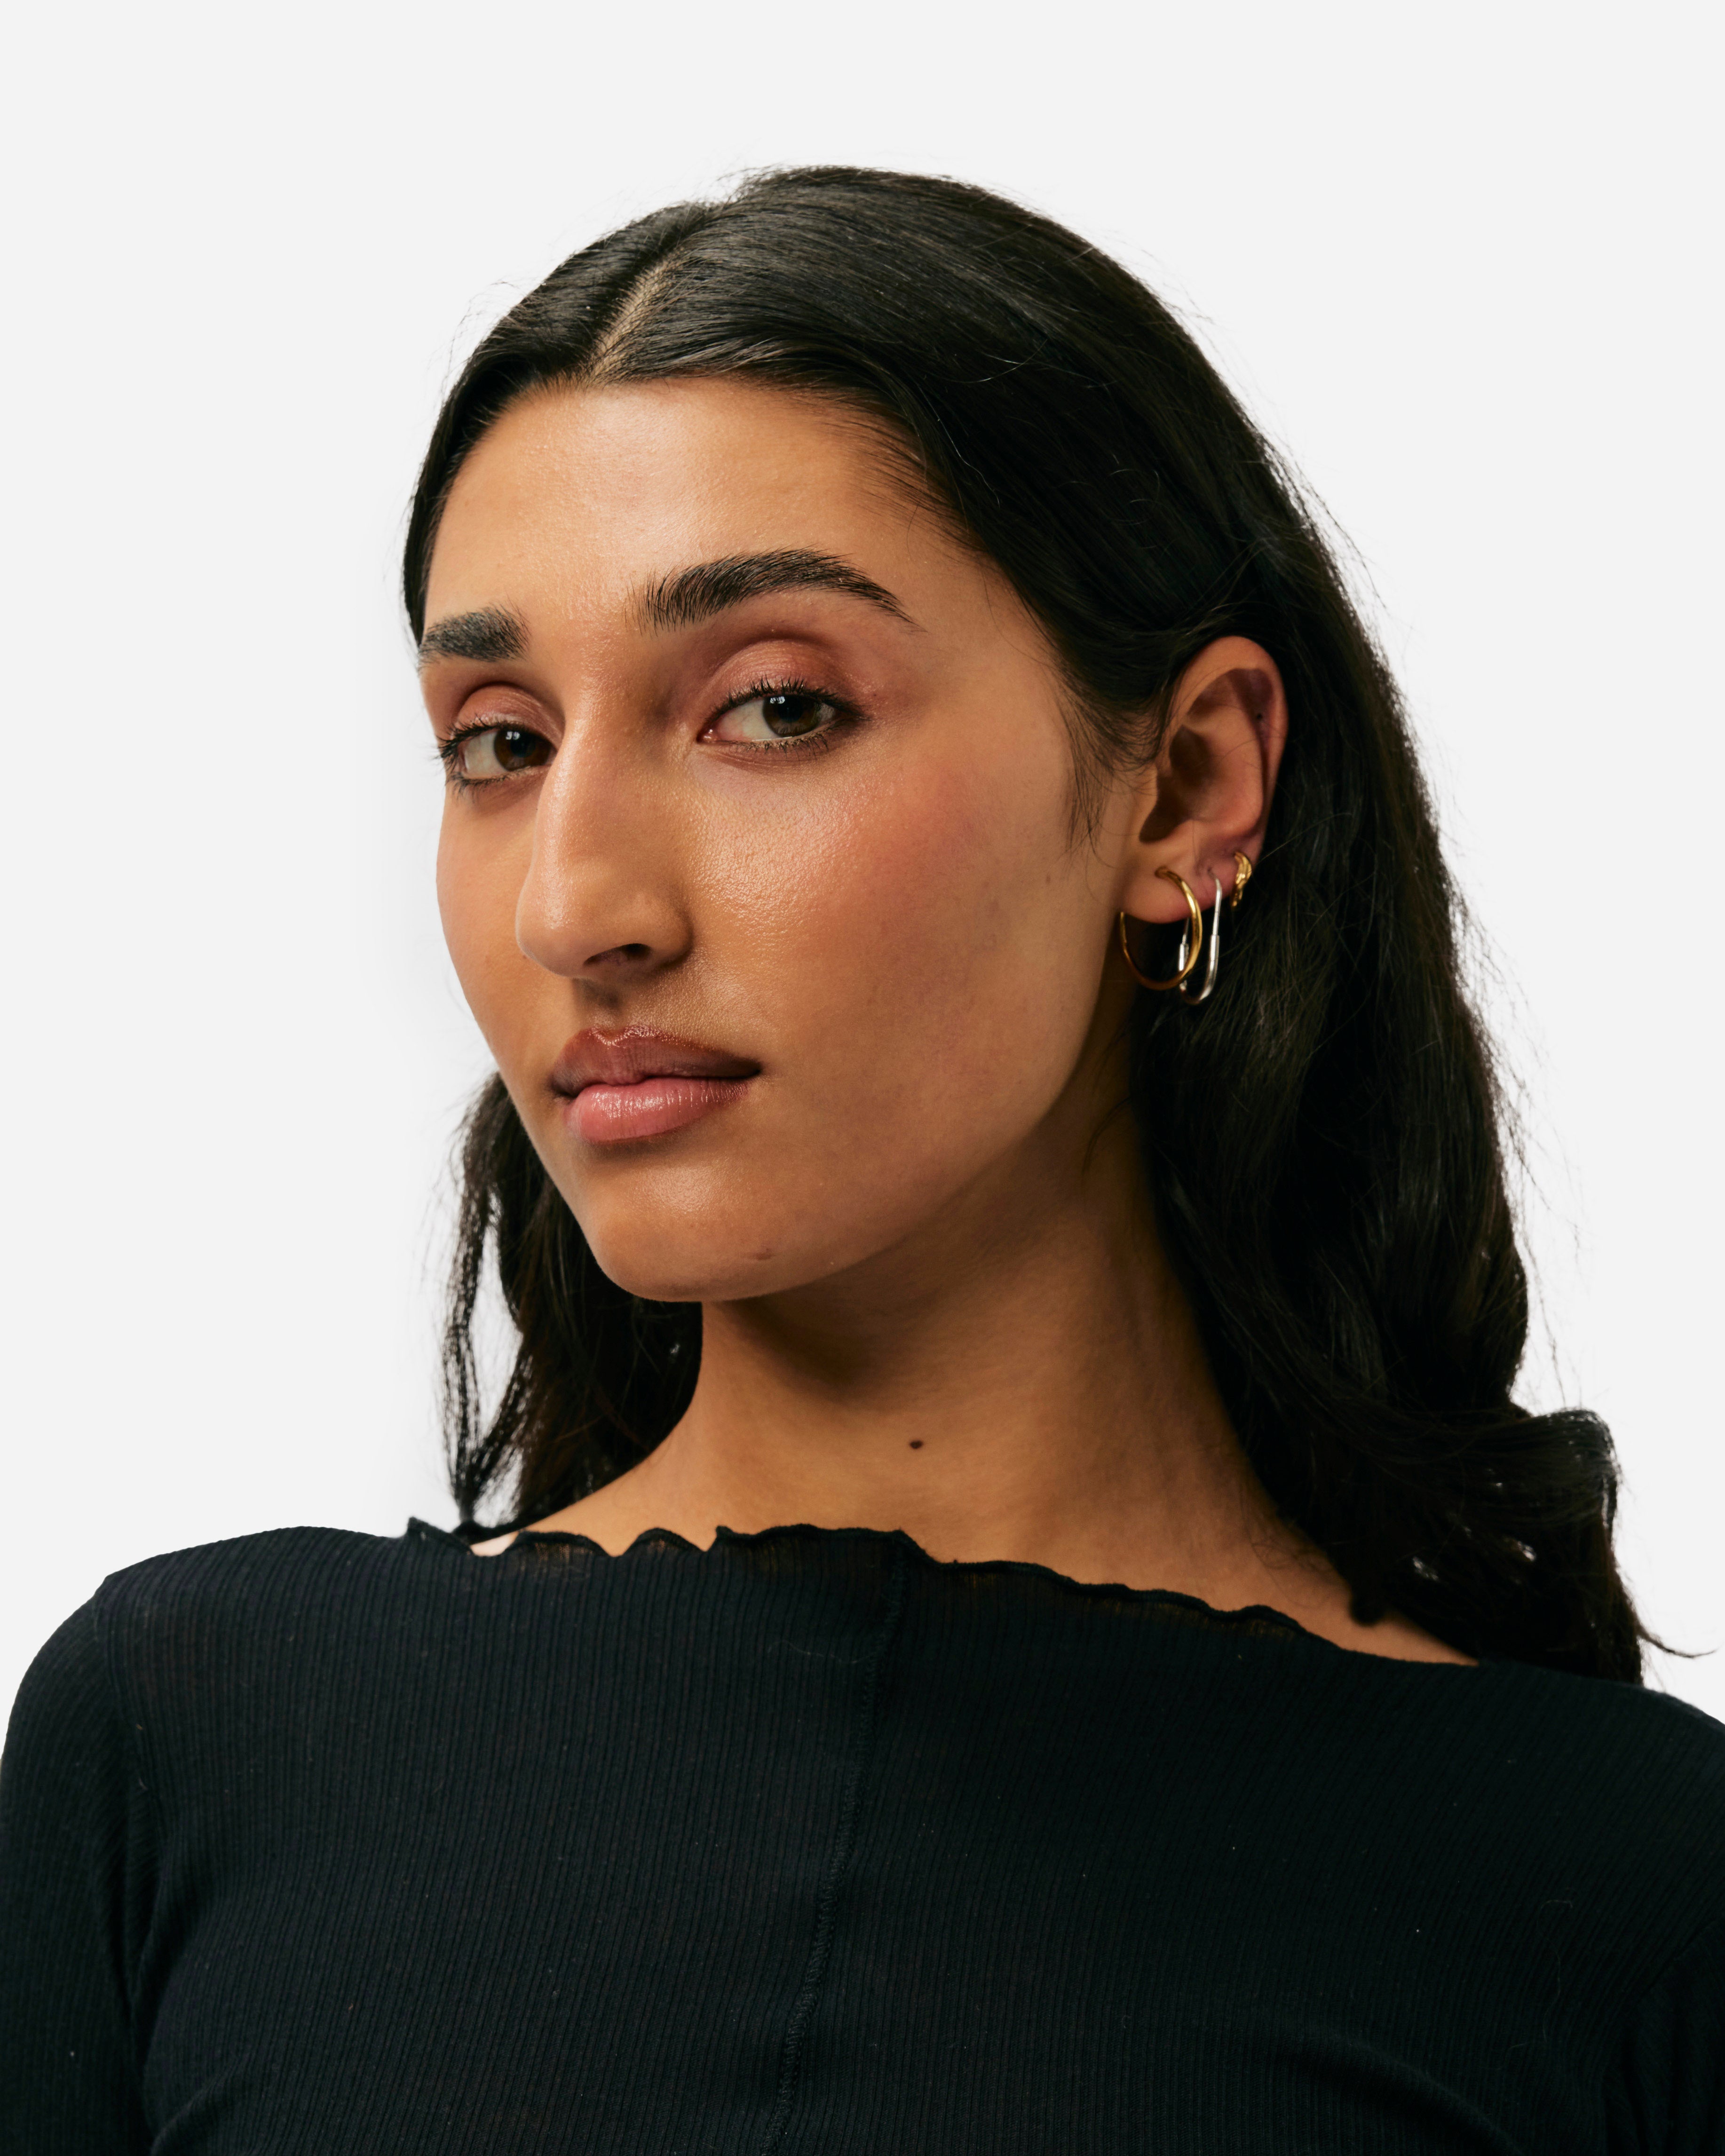 Maria Black Chance Mini Earring Silver 100581